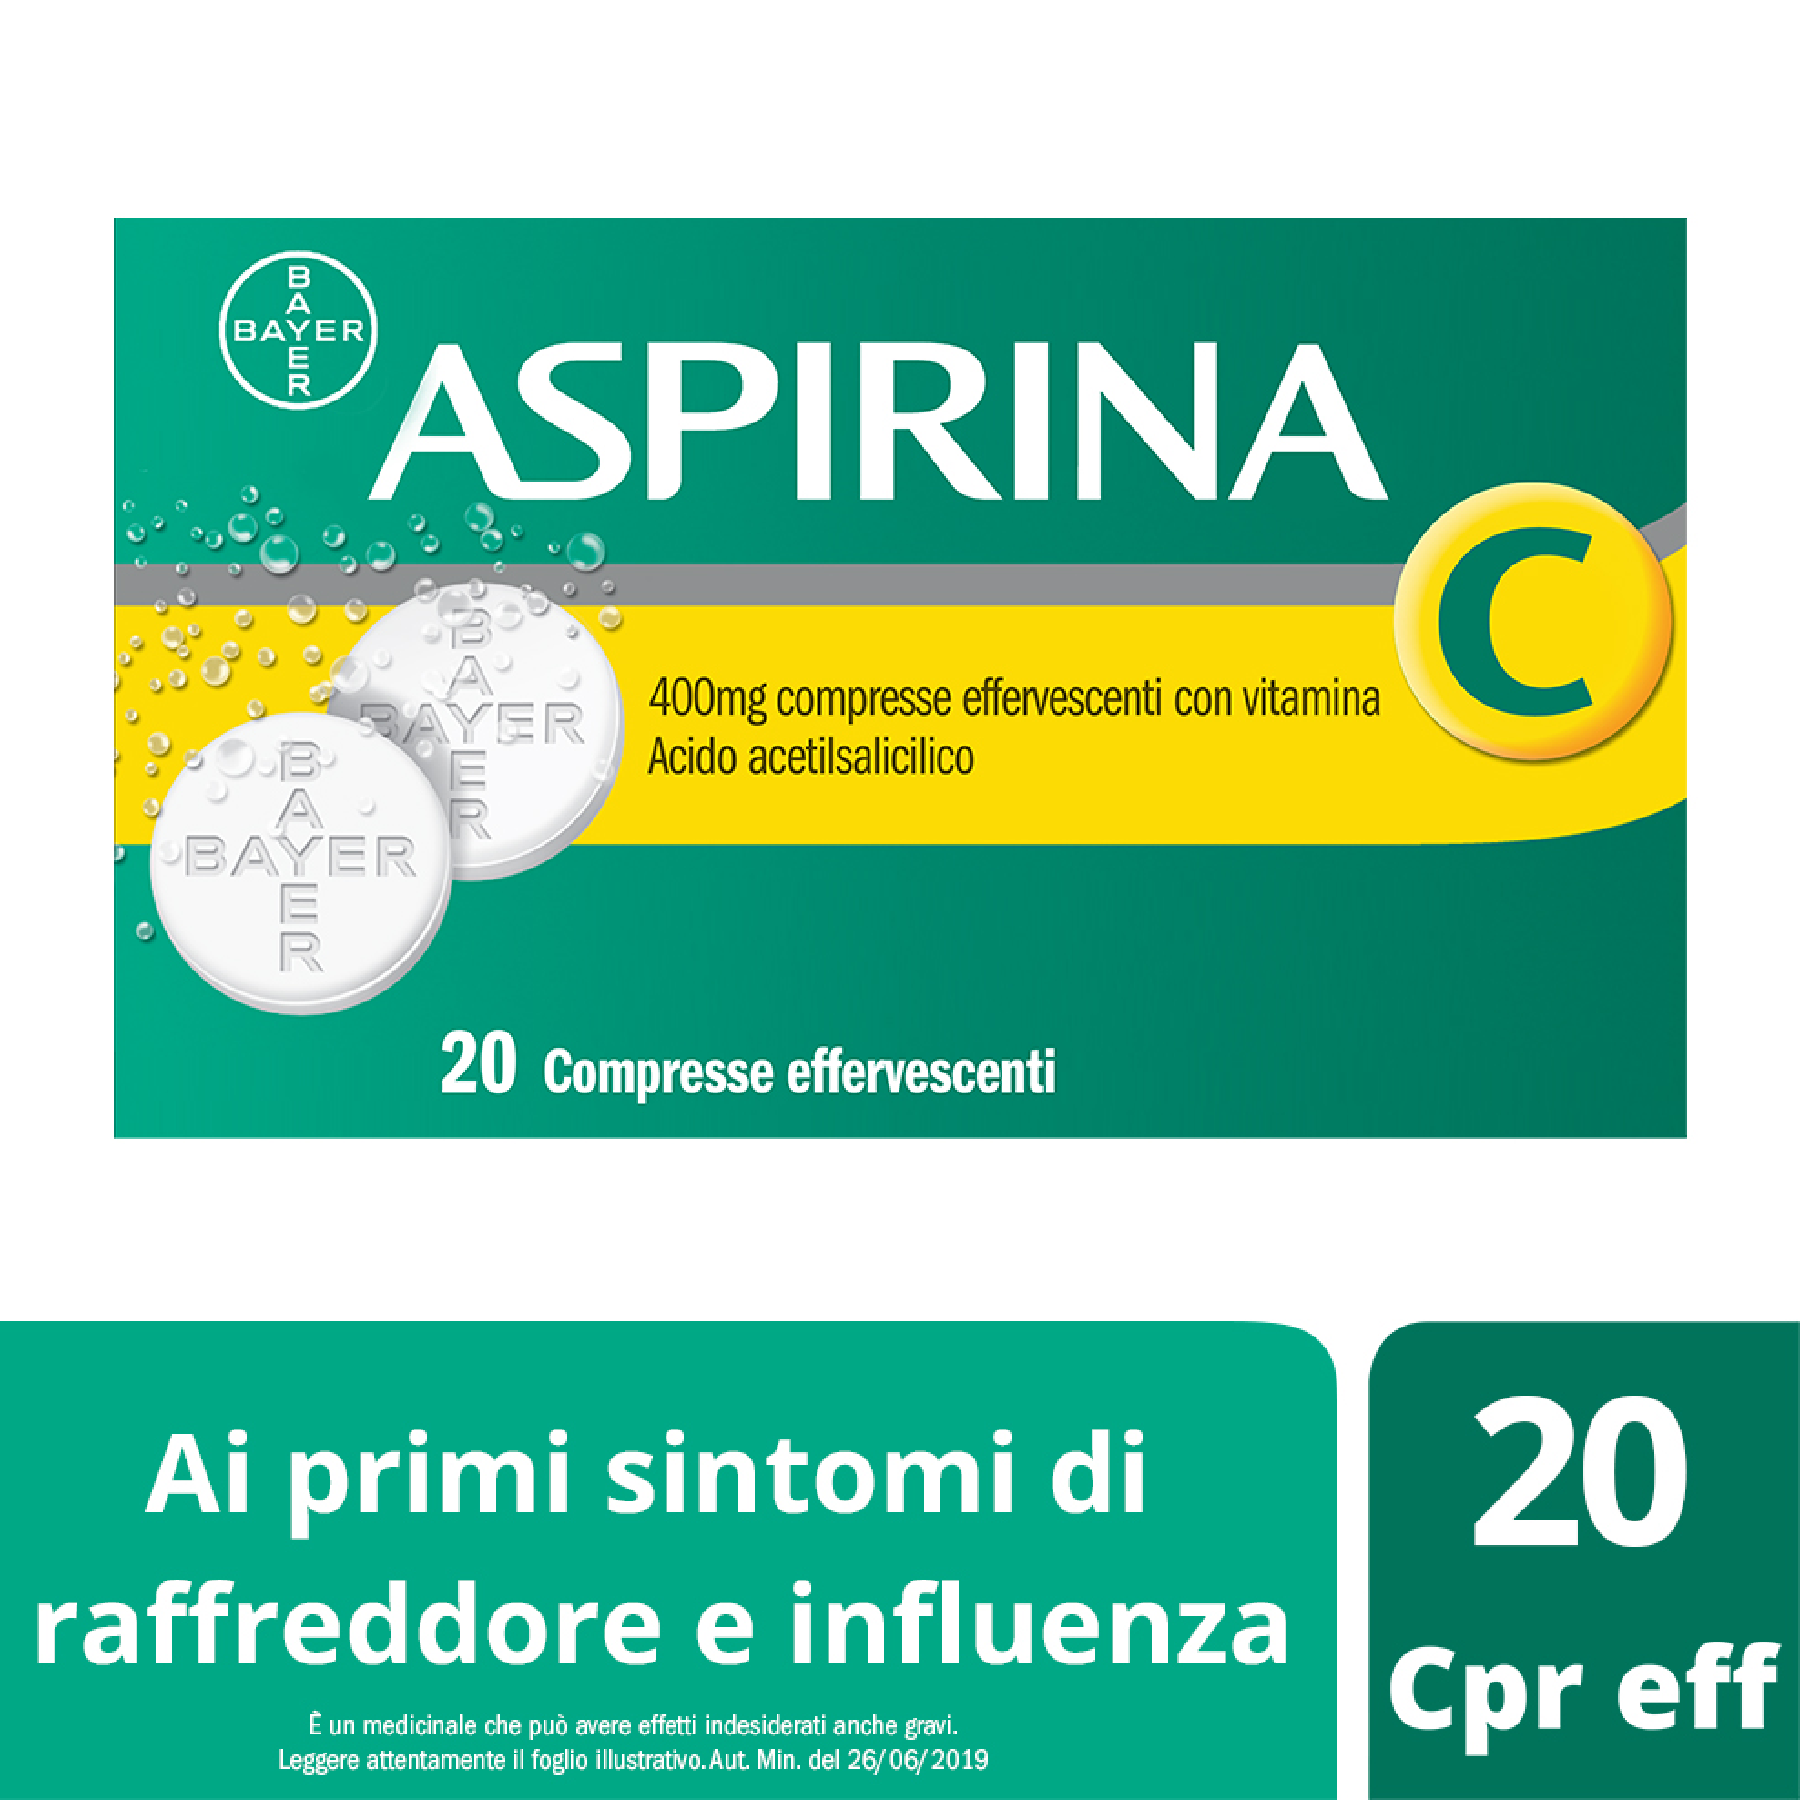 Bayer Aspirina C 400mg (20 cpr effervescenti)